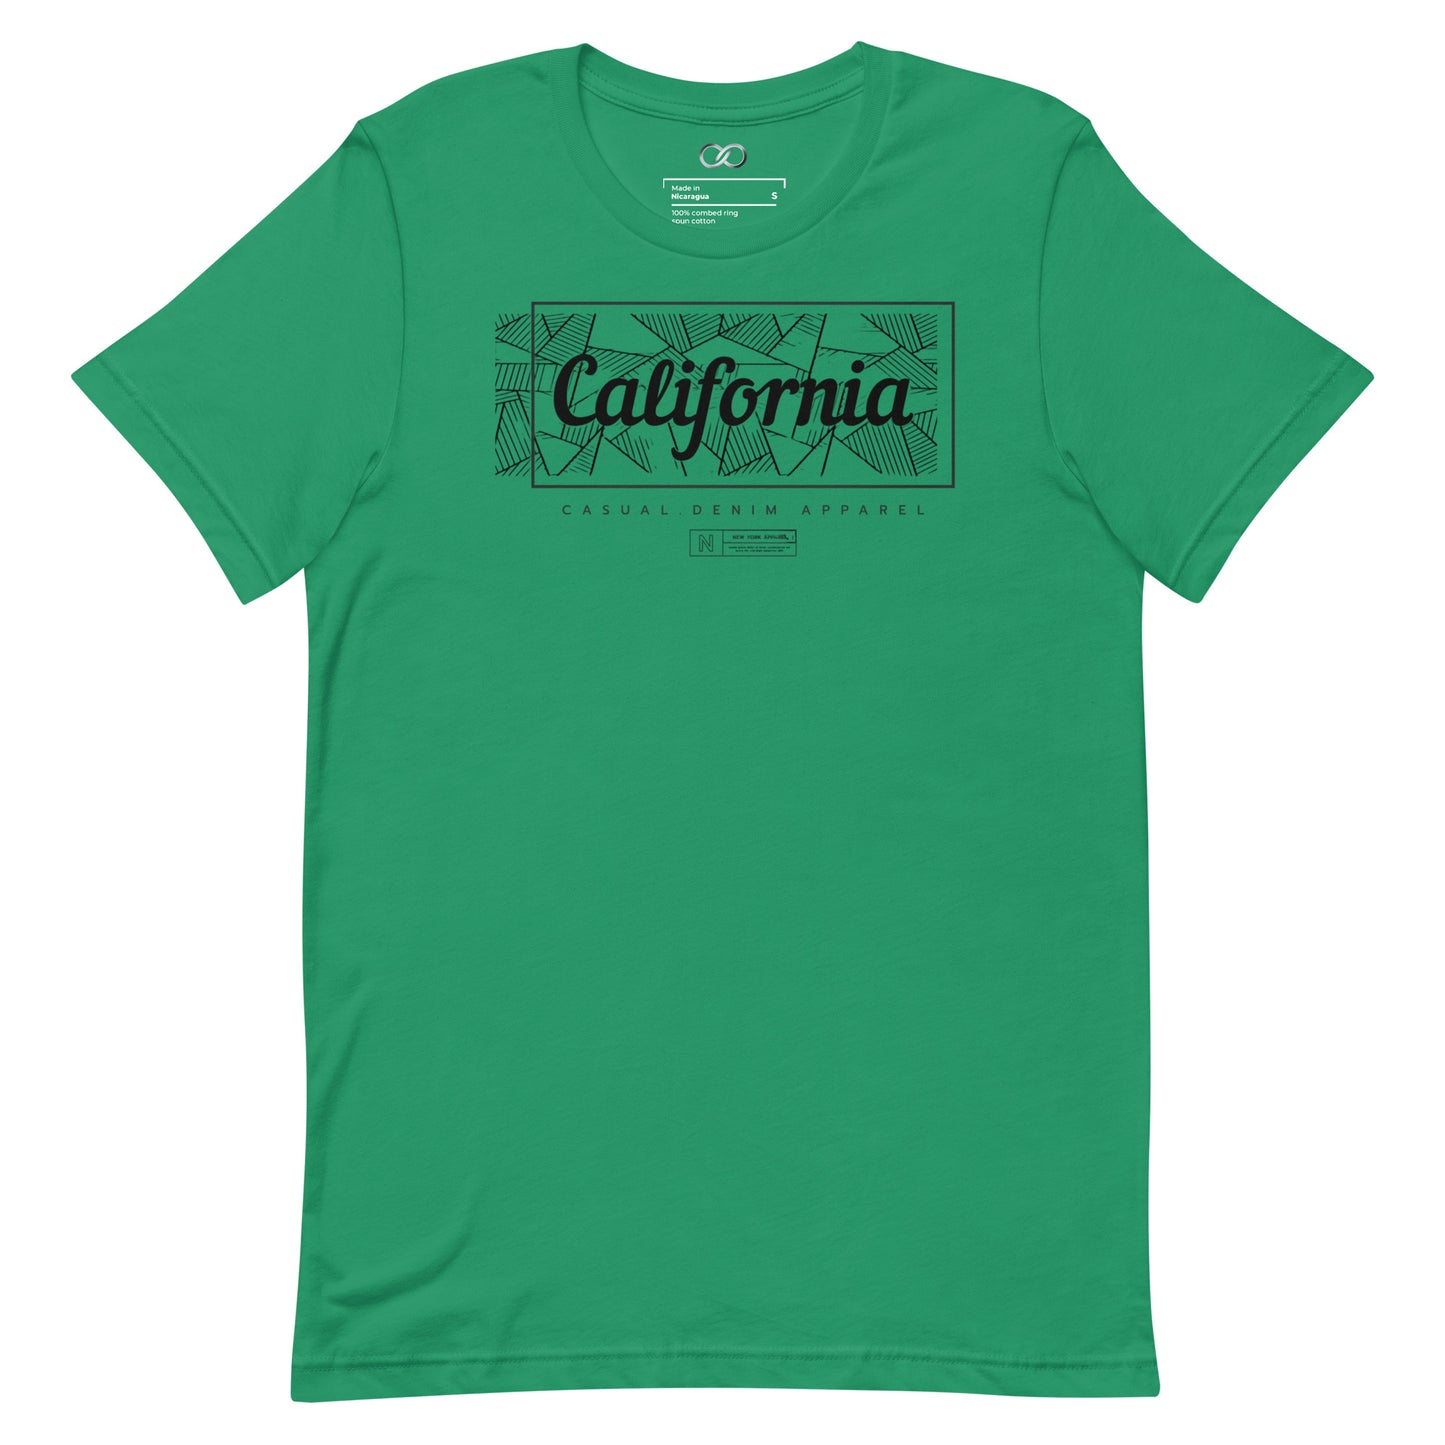 California Graphic T-Shirt - Retro Print Cotton Tee